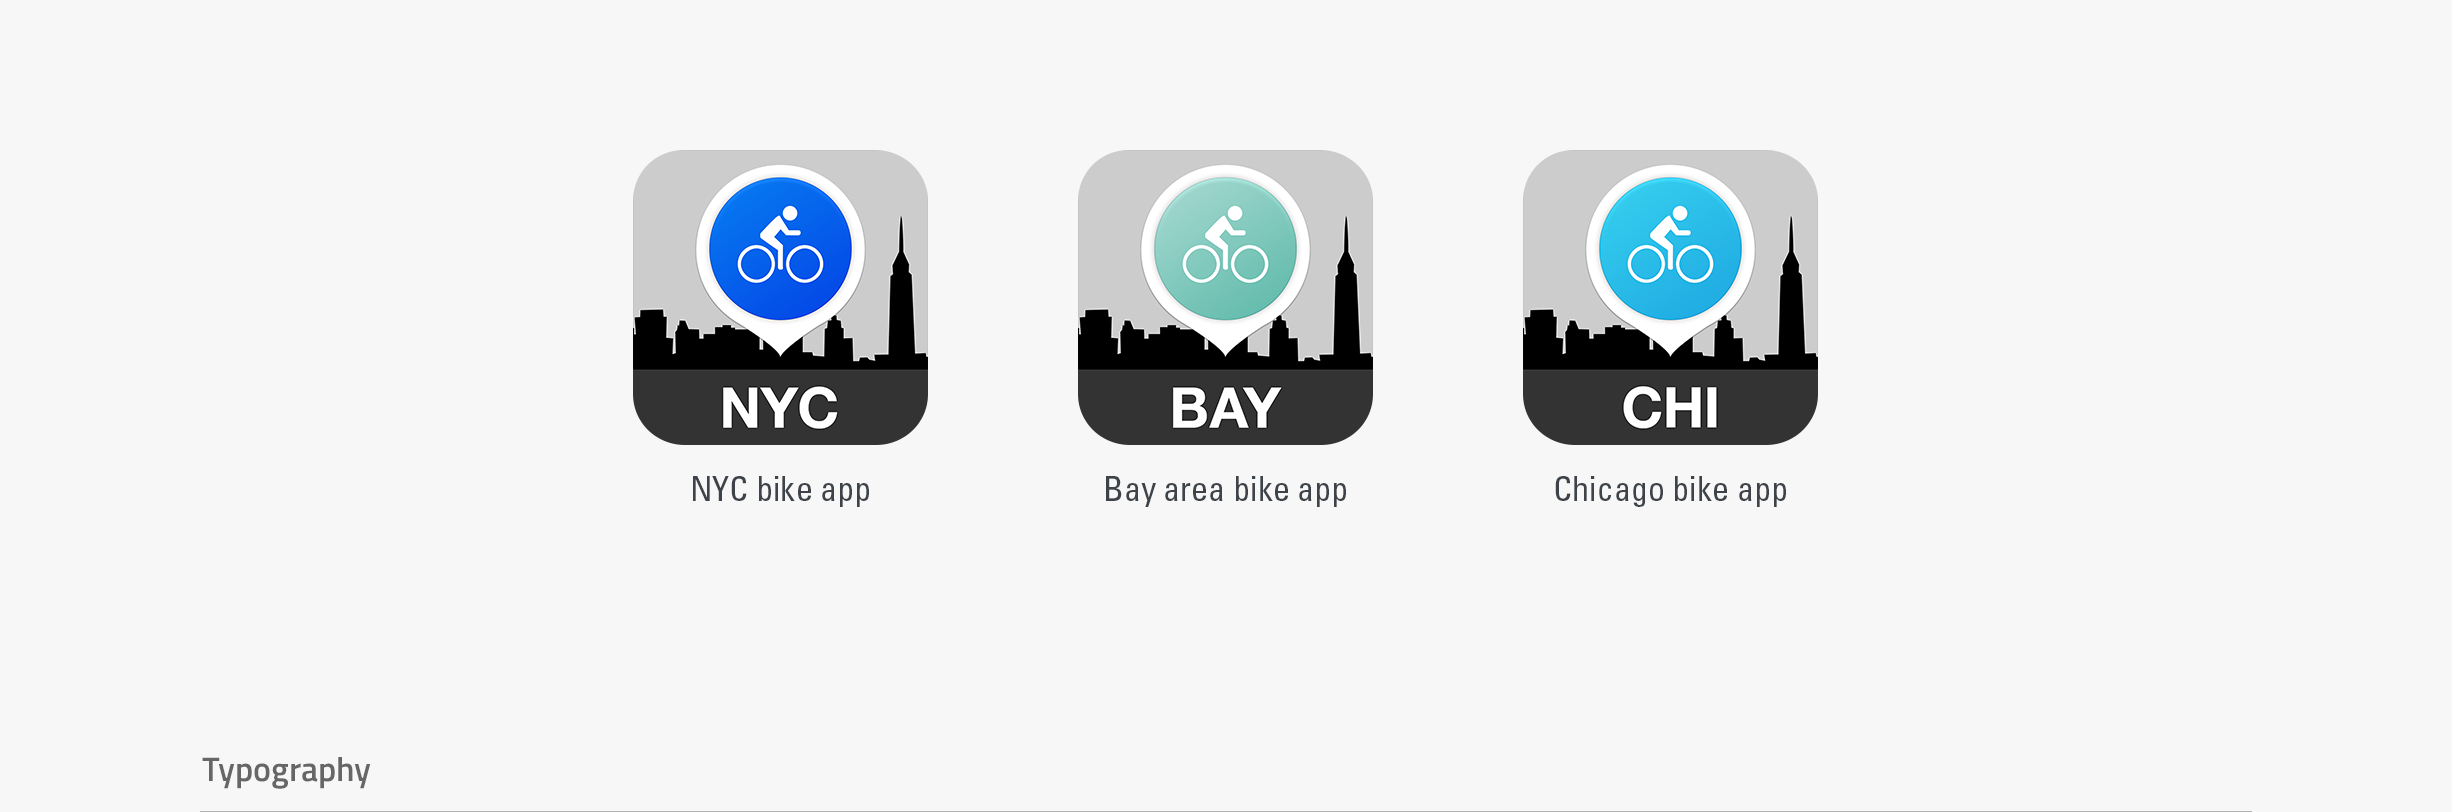 Bike app - app icon